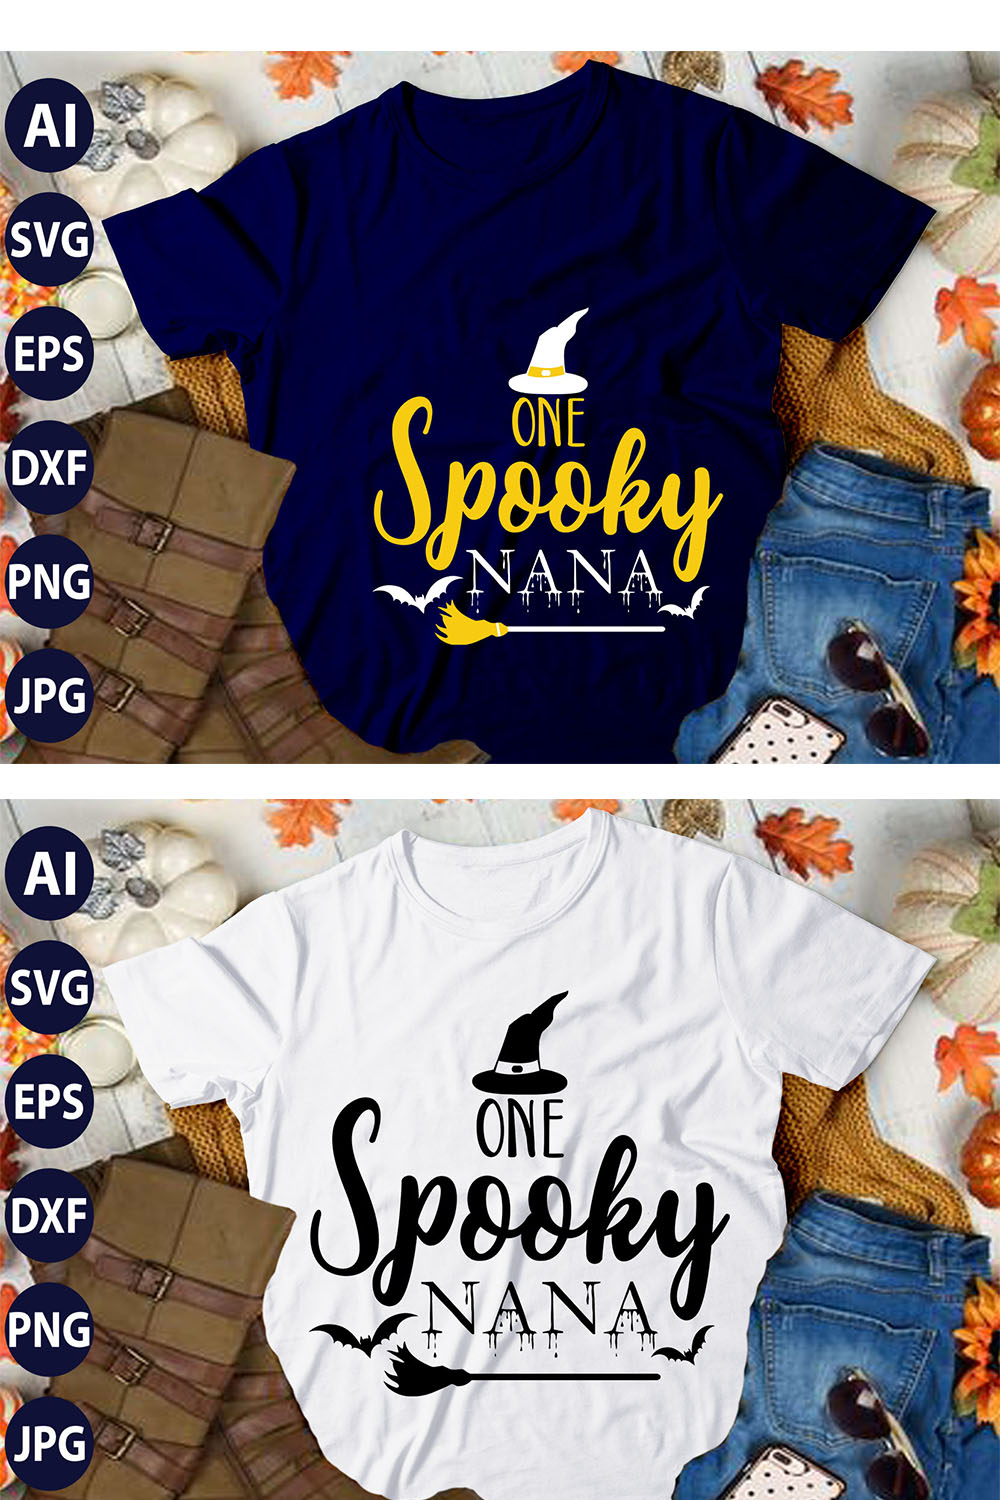 One Spooky Nana, SVG T-Shirt Design |Happy Halloween & Pumpkin T-Shirt Design | Ai, Svg, Eps, Dxf, Jpeg, Png, Instant download T-Shirt | 100% print-ready Digital vector file pinterest preview image.